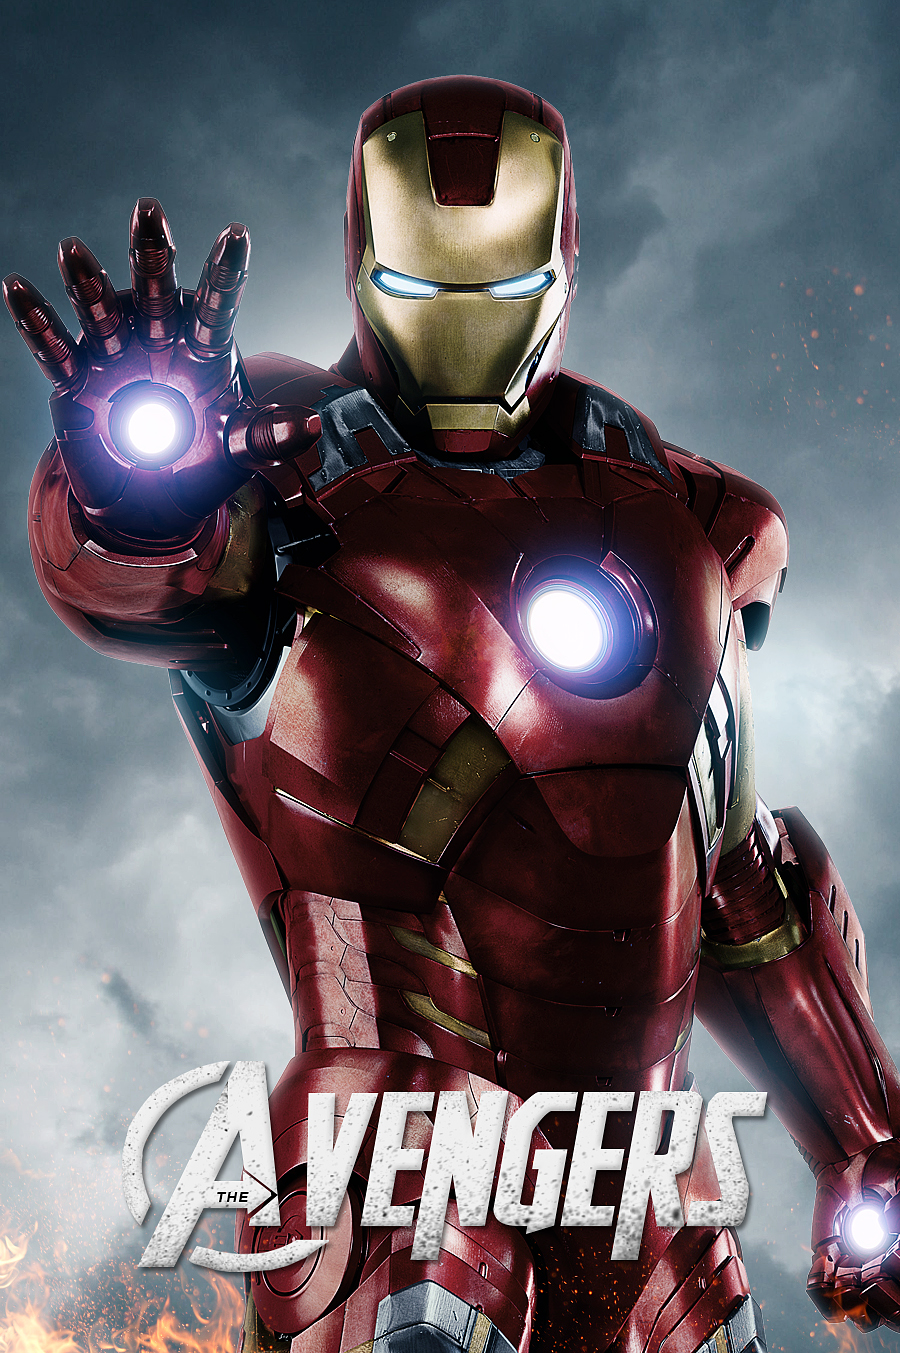 The Avengers-Iron Man by LifeEndsNow on DeviantArt